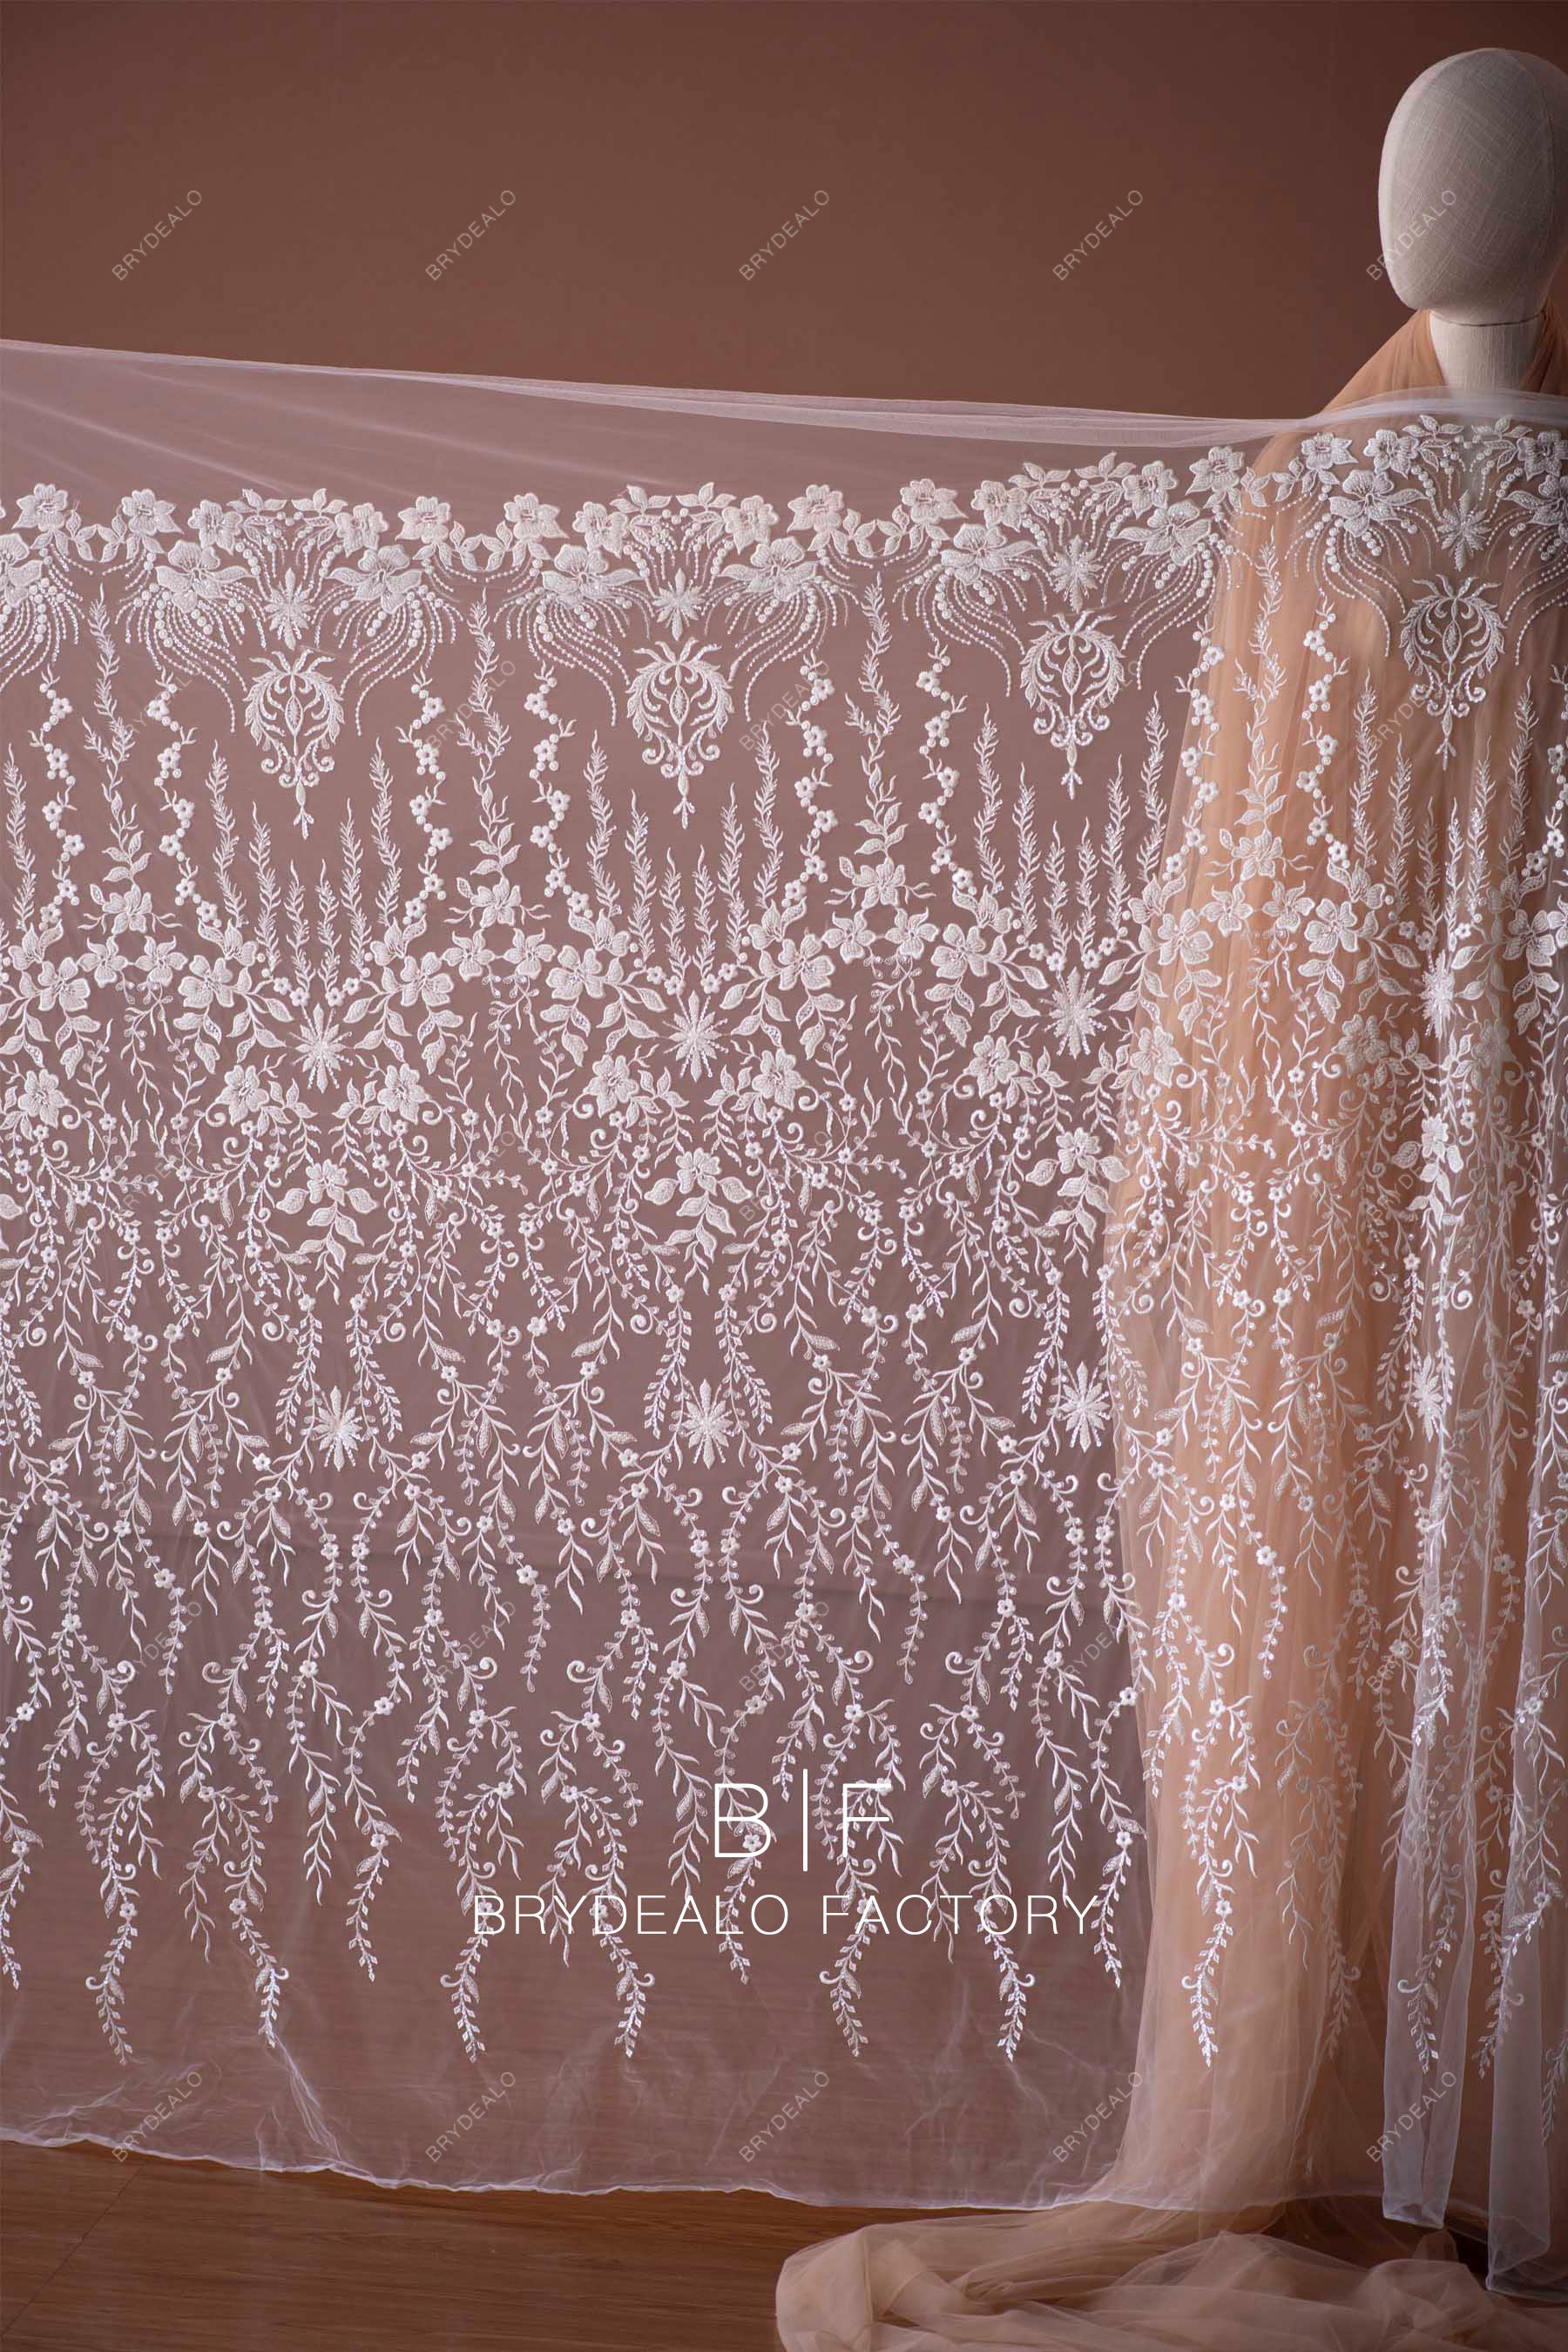 wholesale wedding dress lace fabric